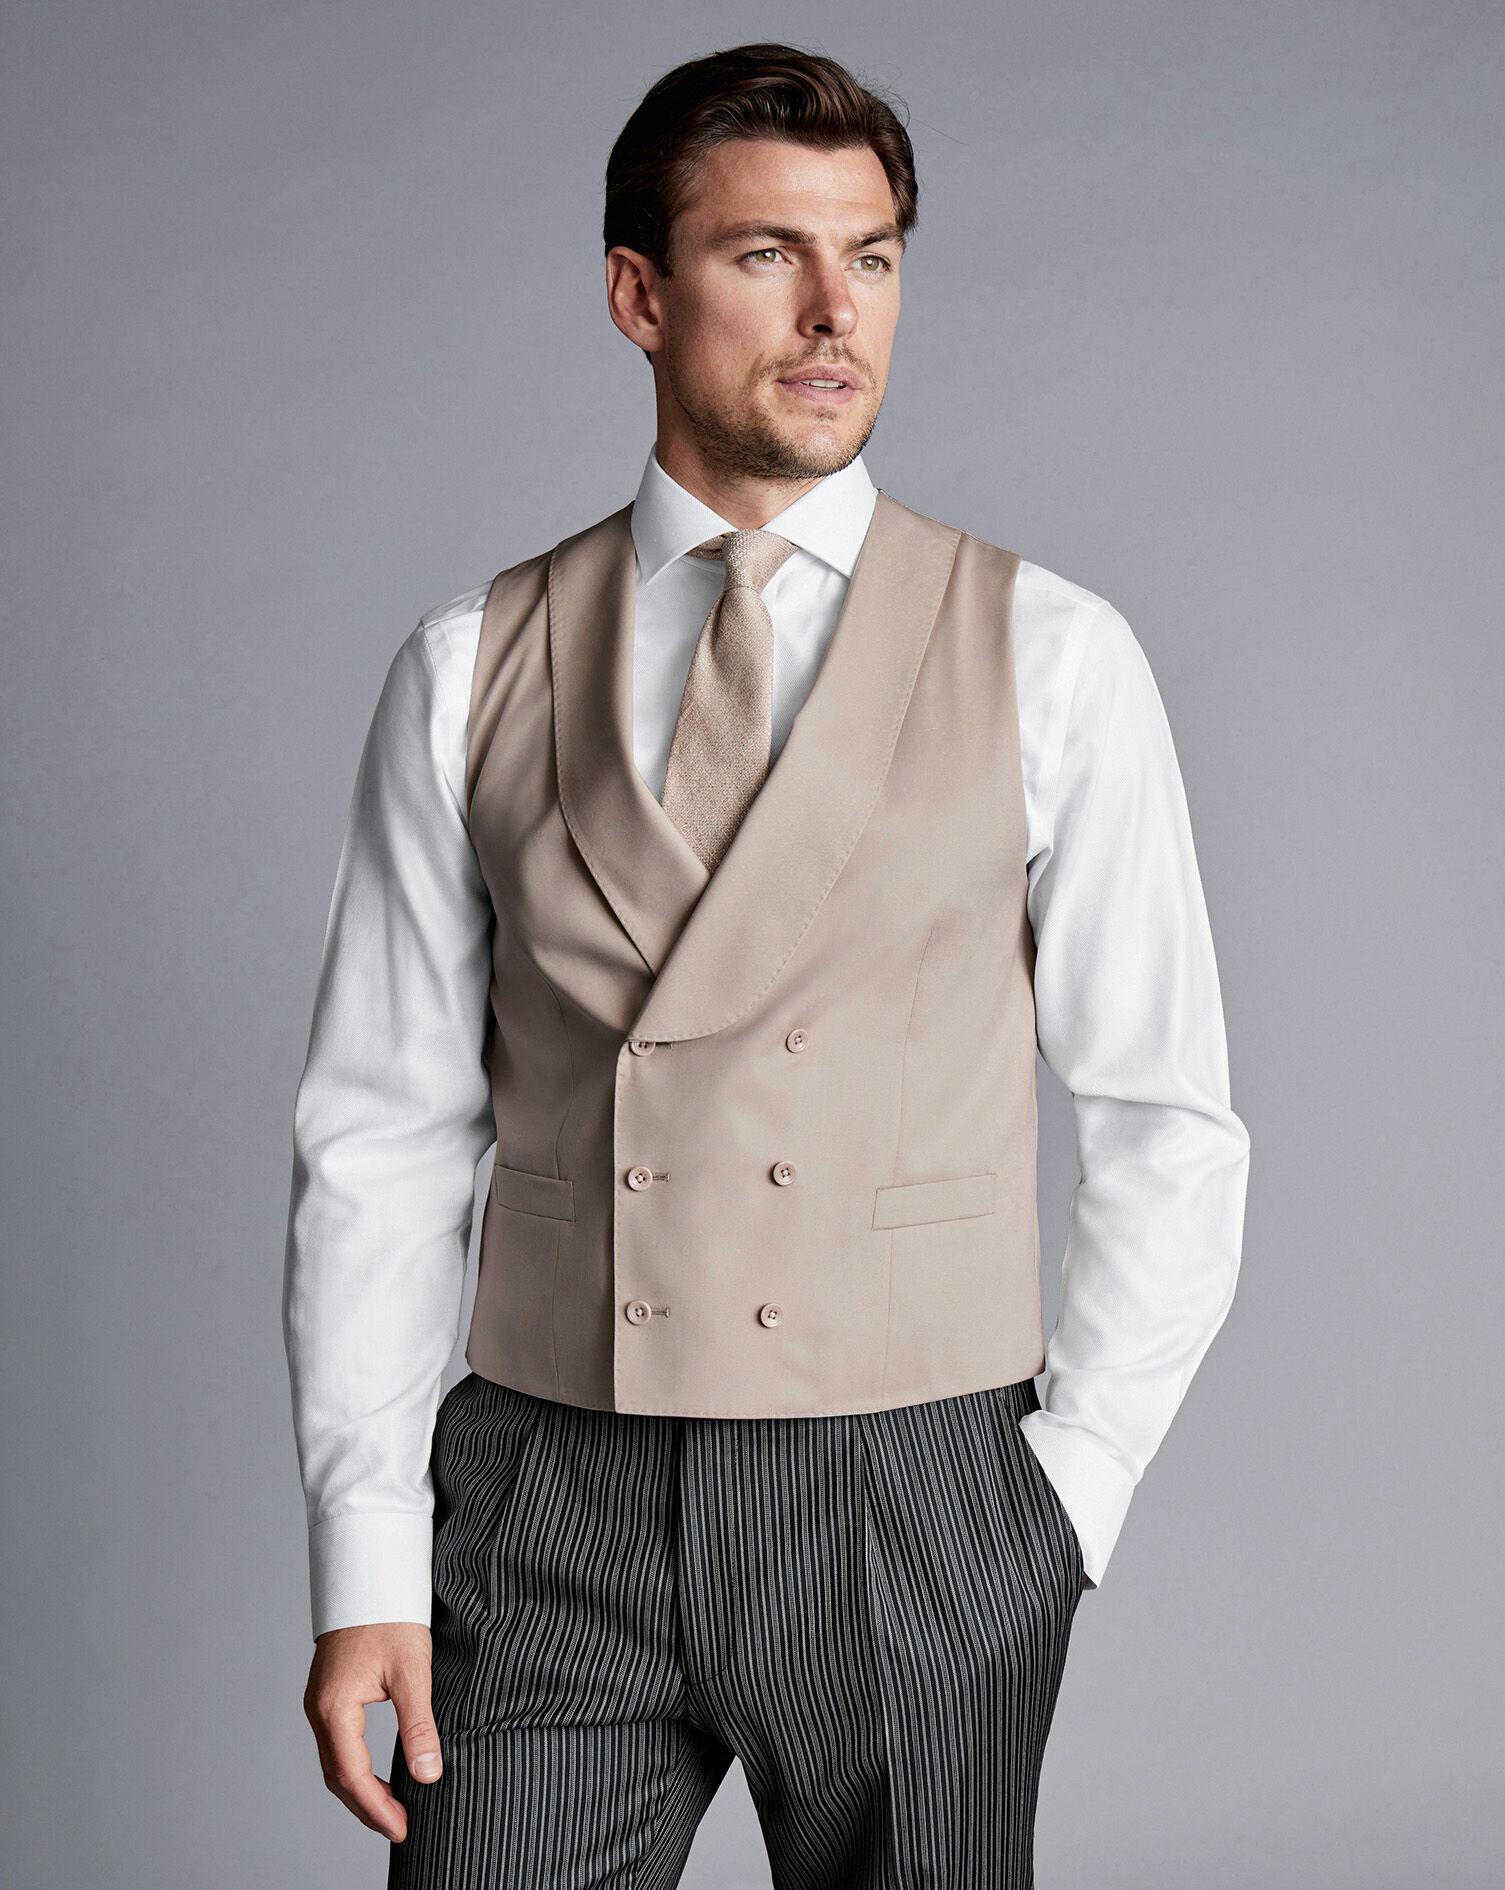 36 Stylish Grey Wedding Suit Ideas  Rock My Wedding